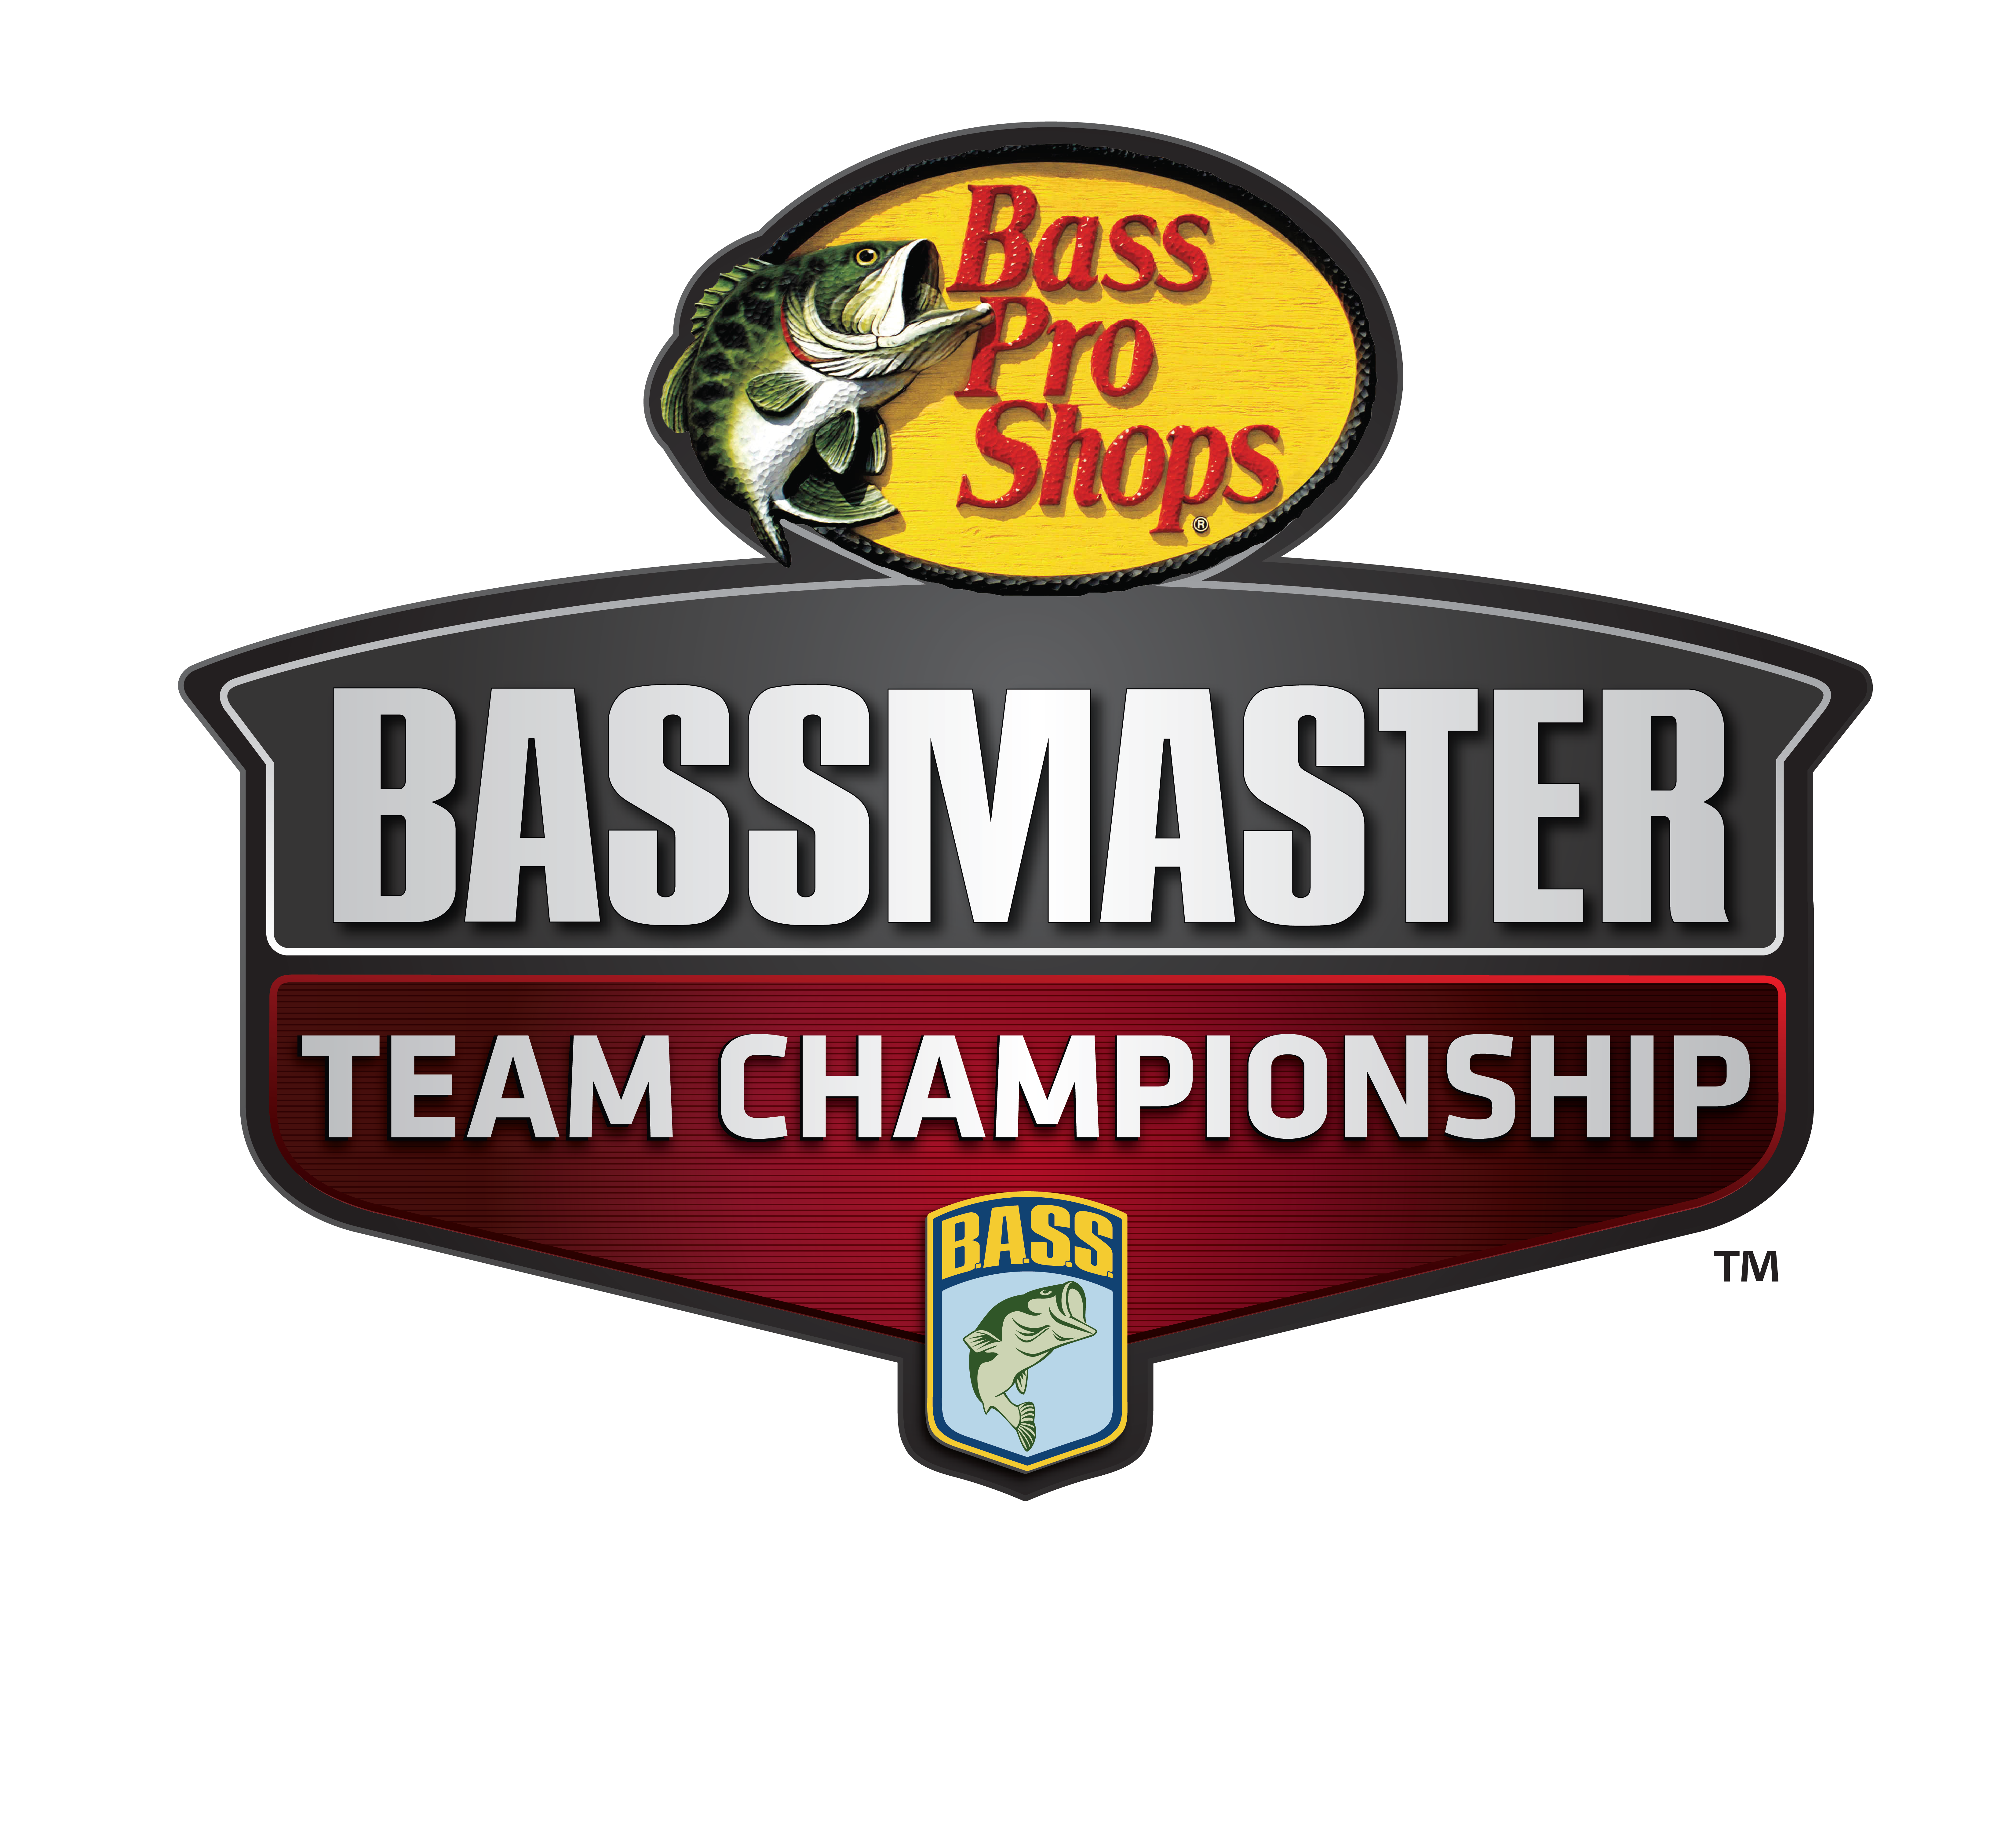 Bass Pro Shops Bassmaster Team Championship logo